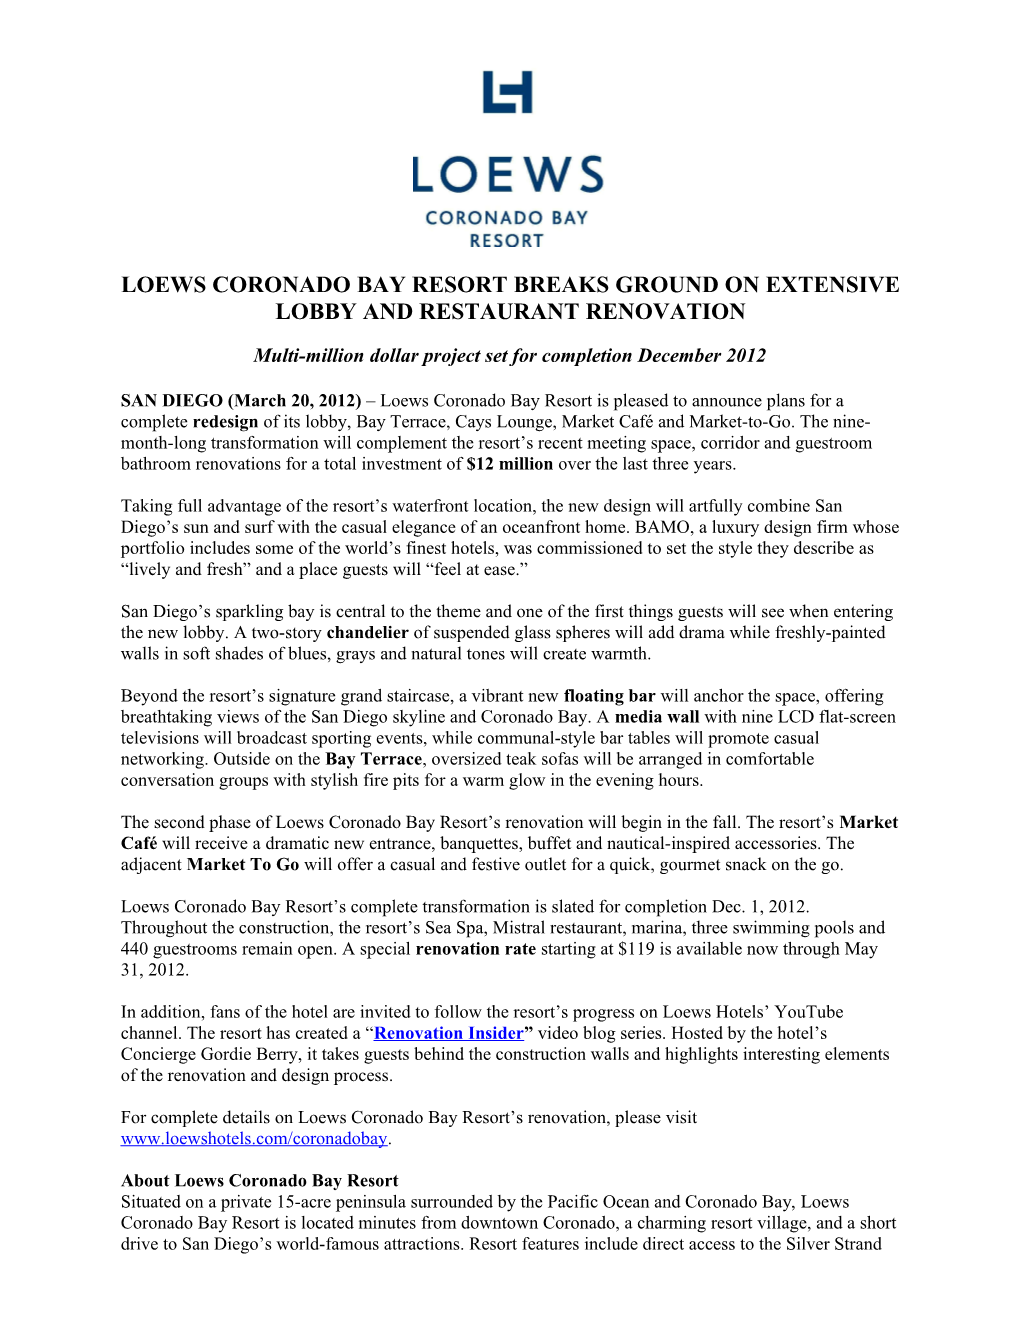 Loews Coronado Bay Resort Breaks Ground on Extensive